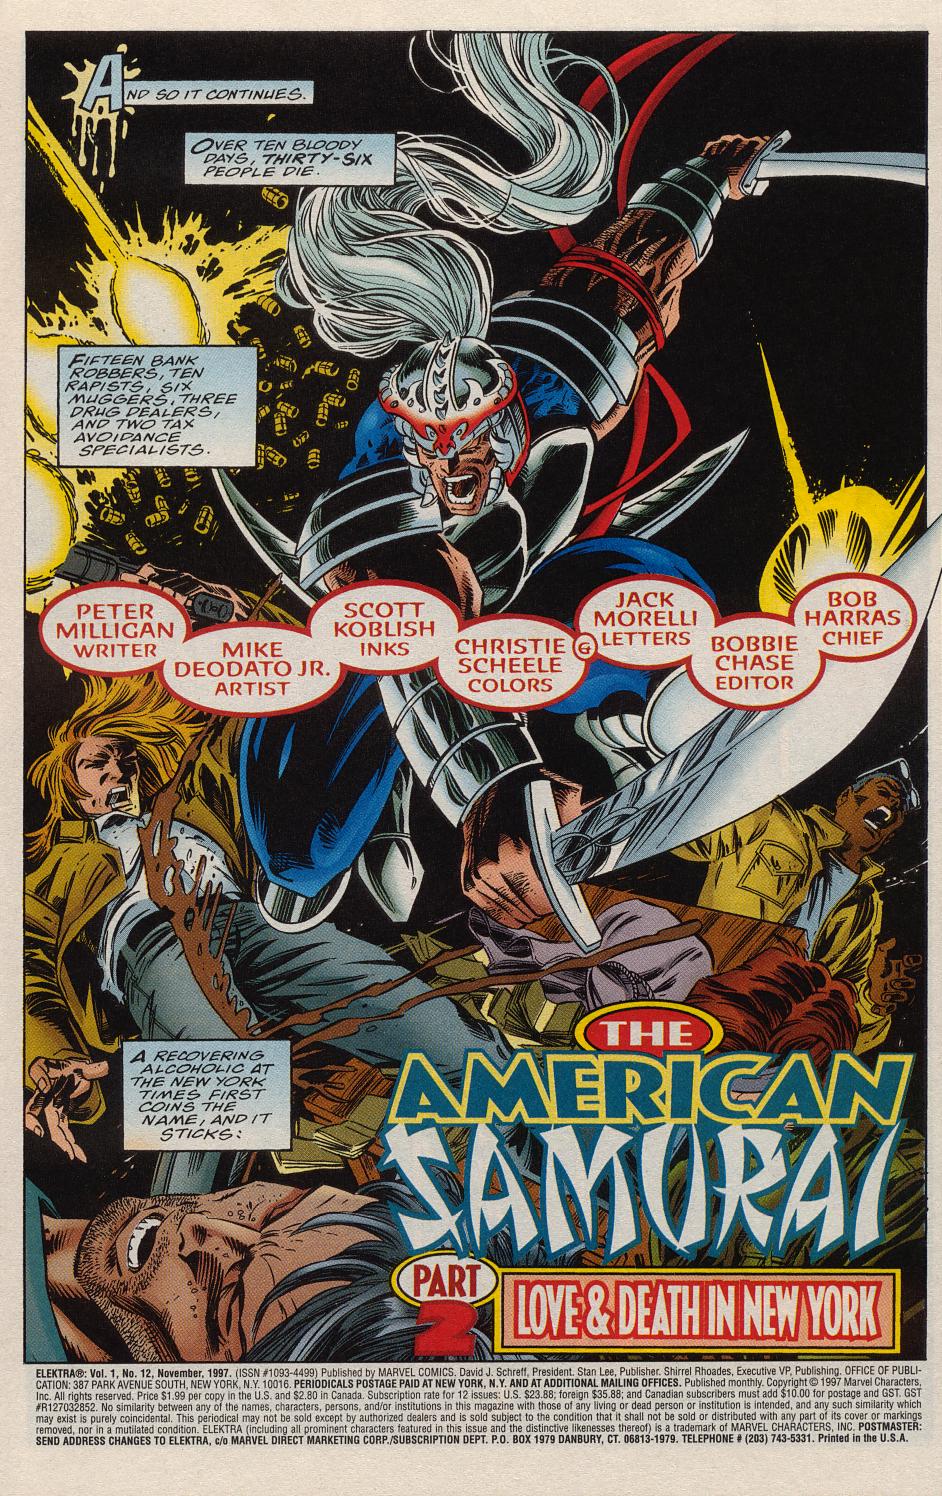 Elektra (1996) Issue #12 - Love and Death in New York (American Samurai Part 2) #13 - English 2